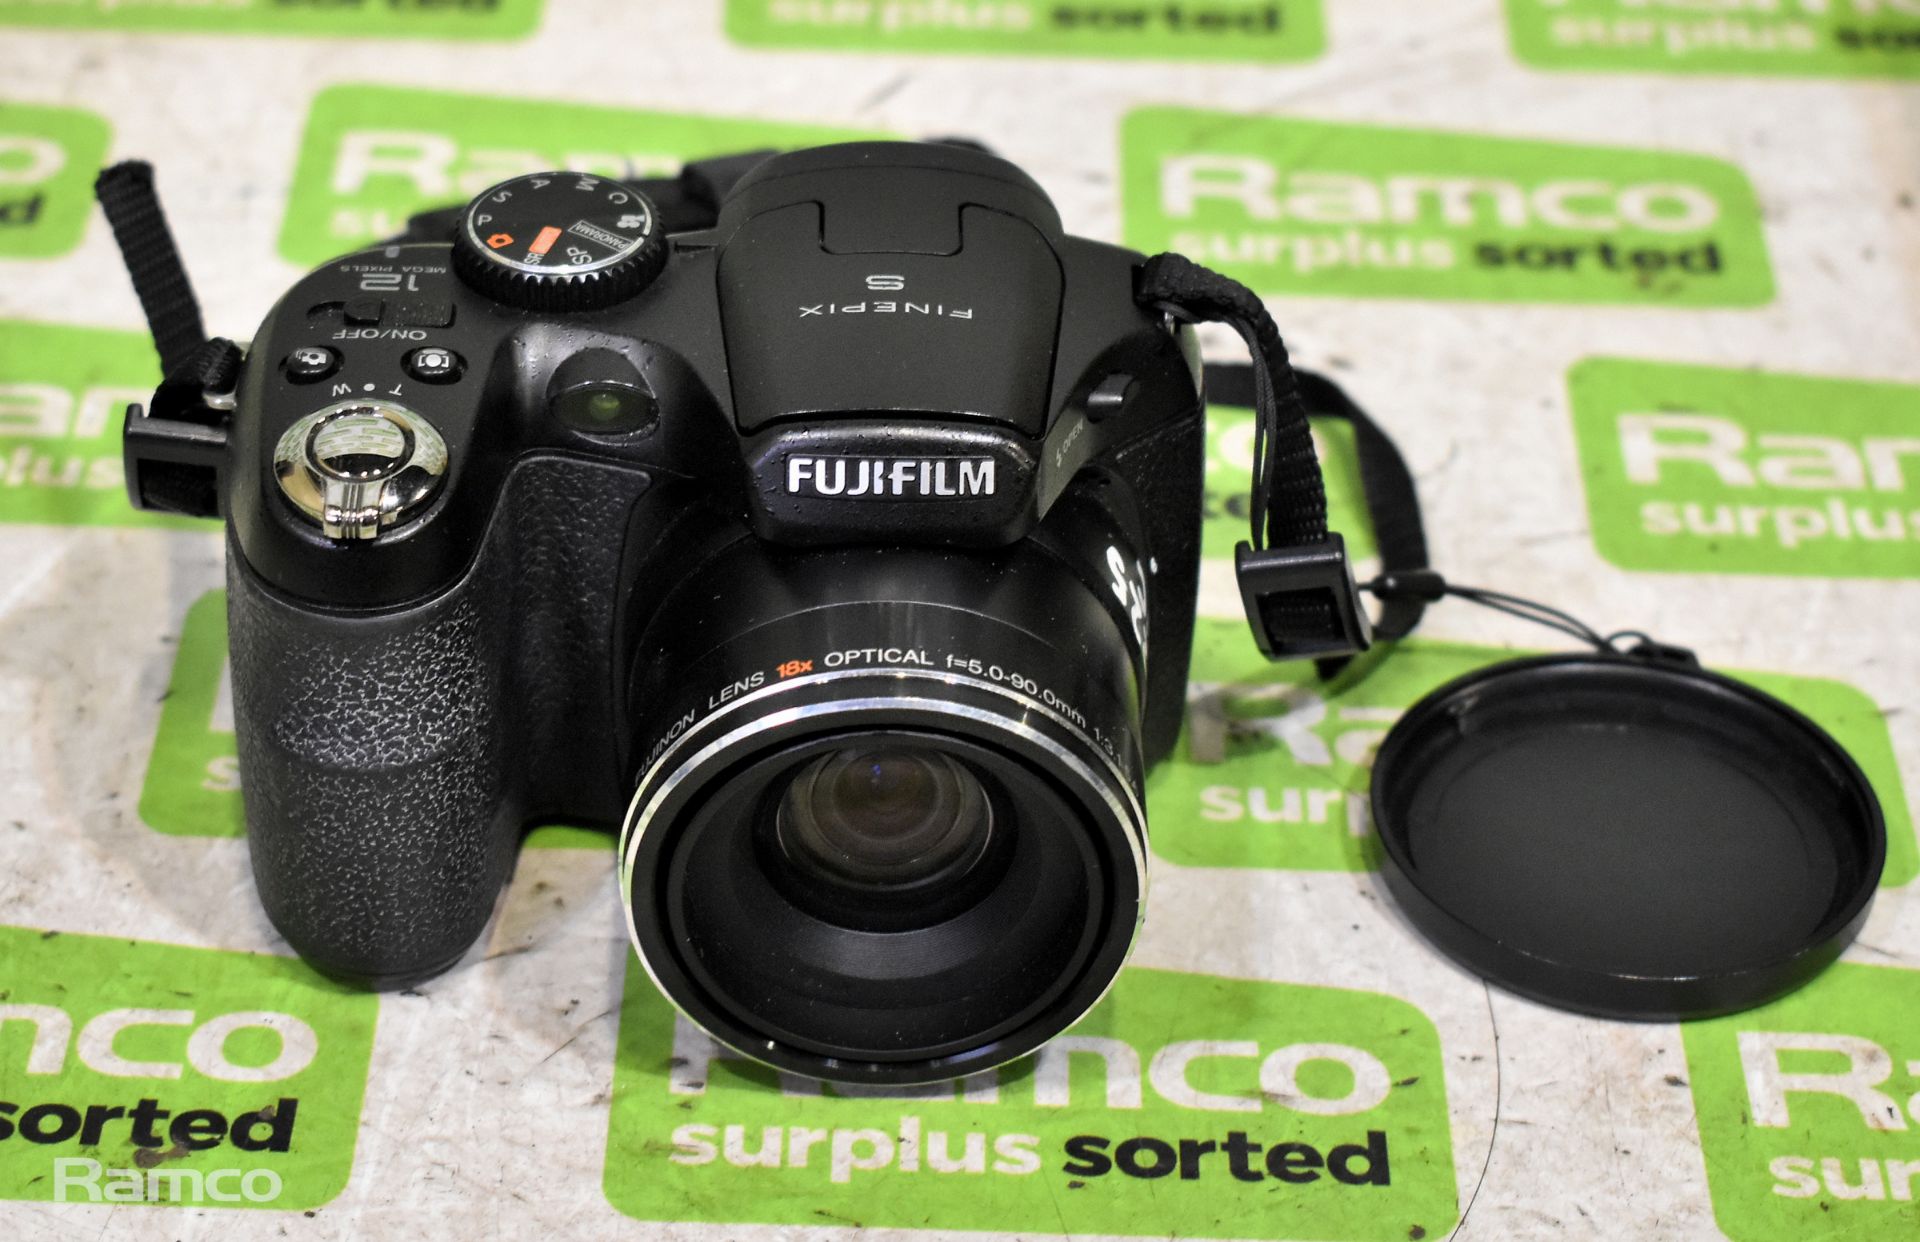 Fujifilm Finepix S2500 HD digital camera with box